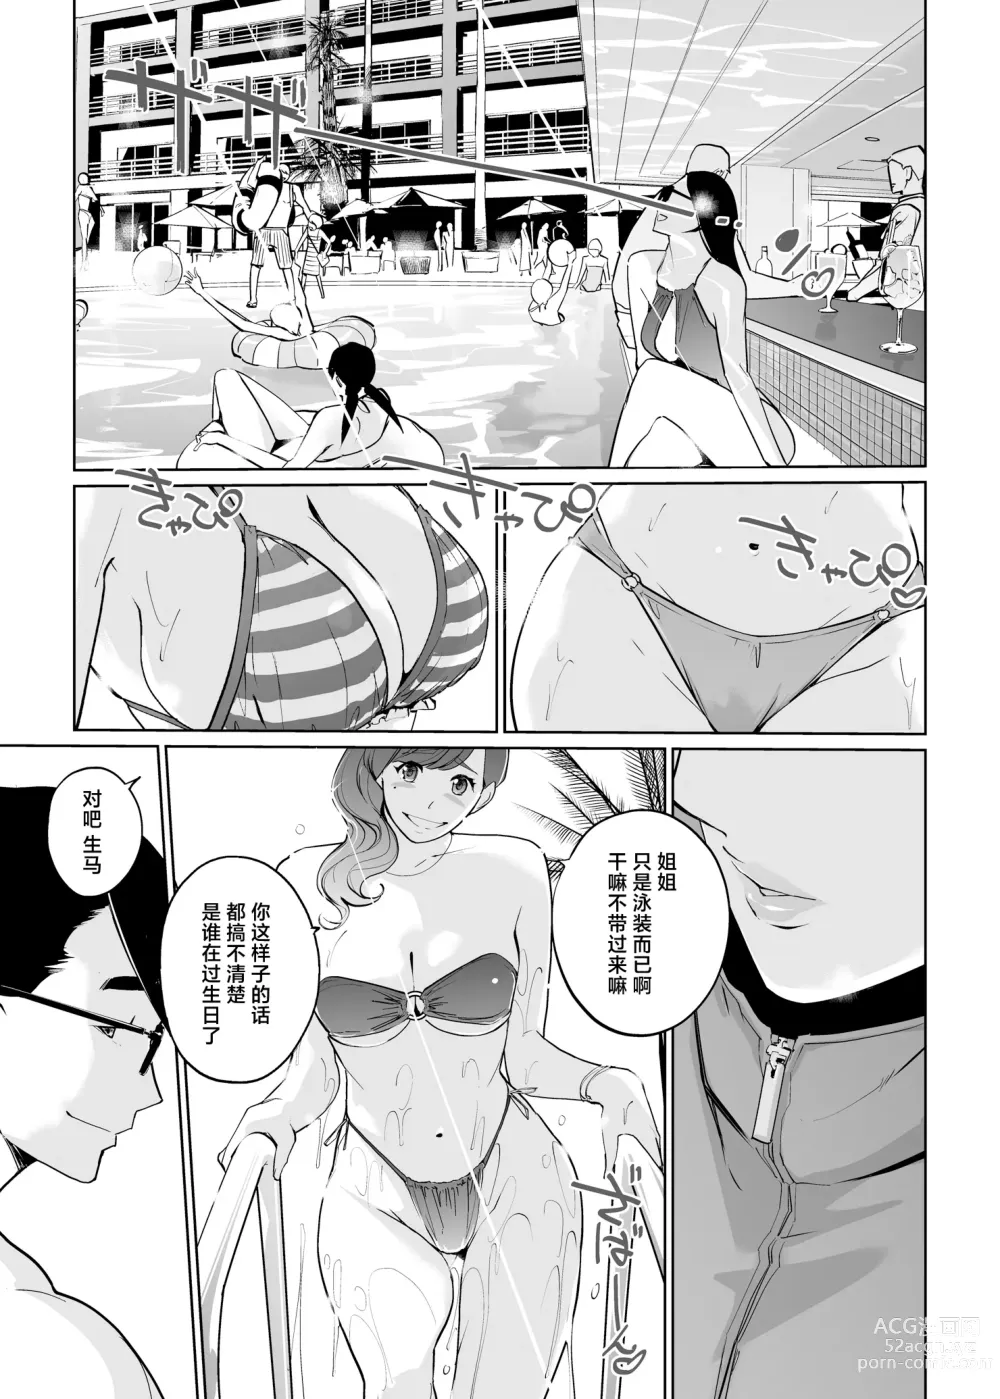 Page 3 of doujinshi NTR Midnight Pool Season 2 #1